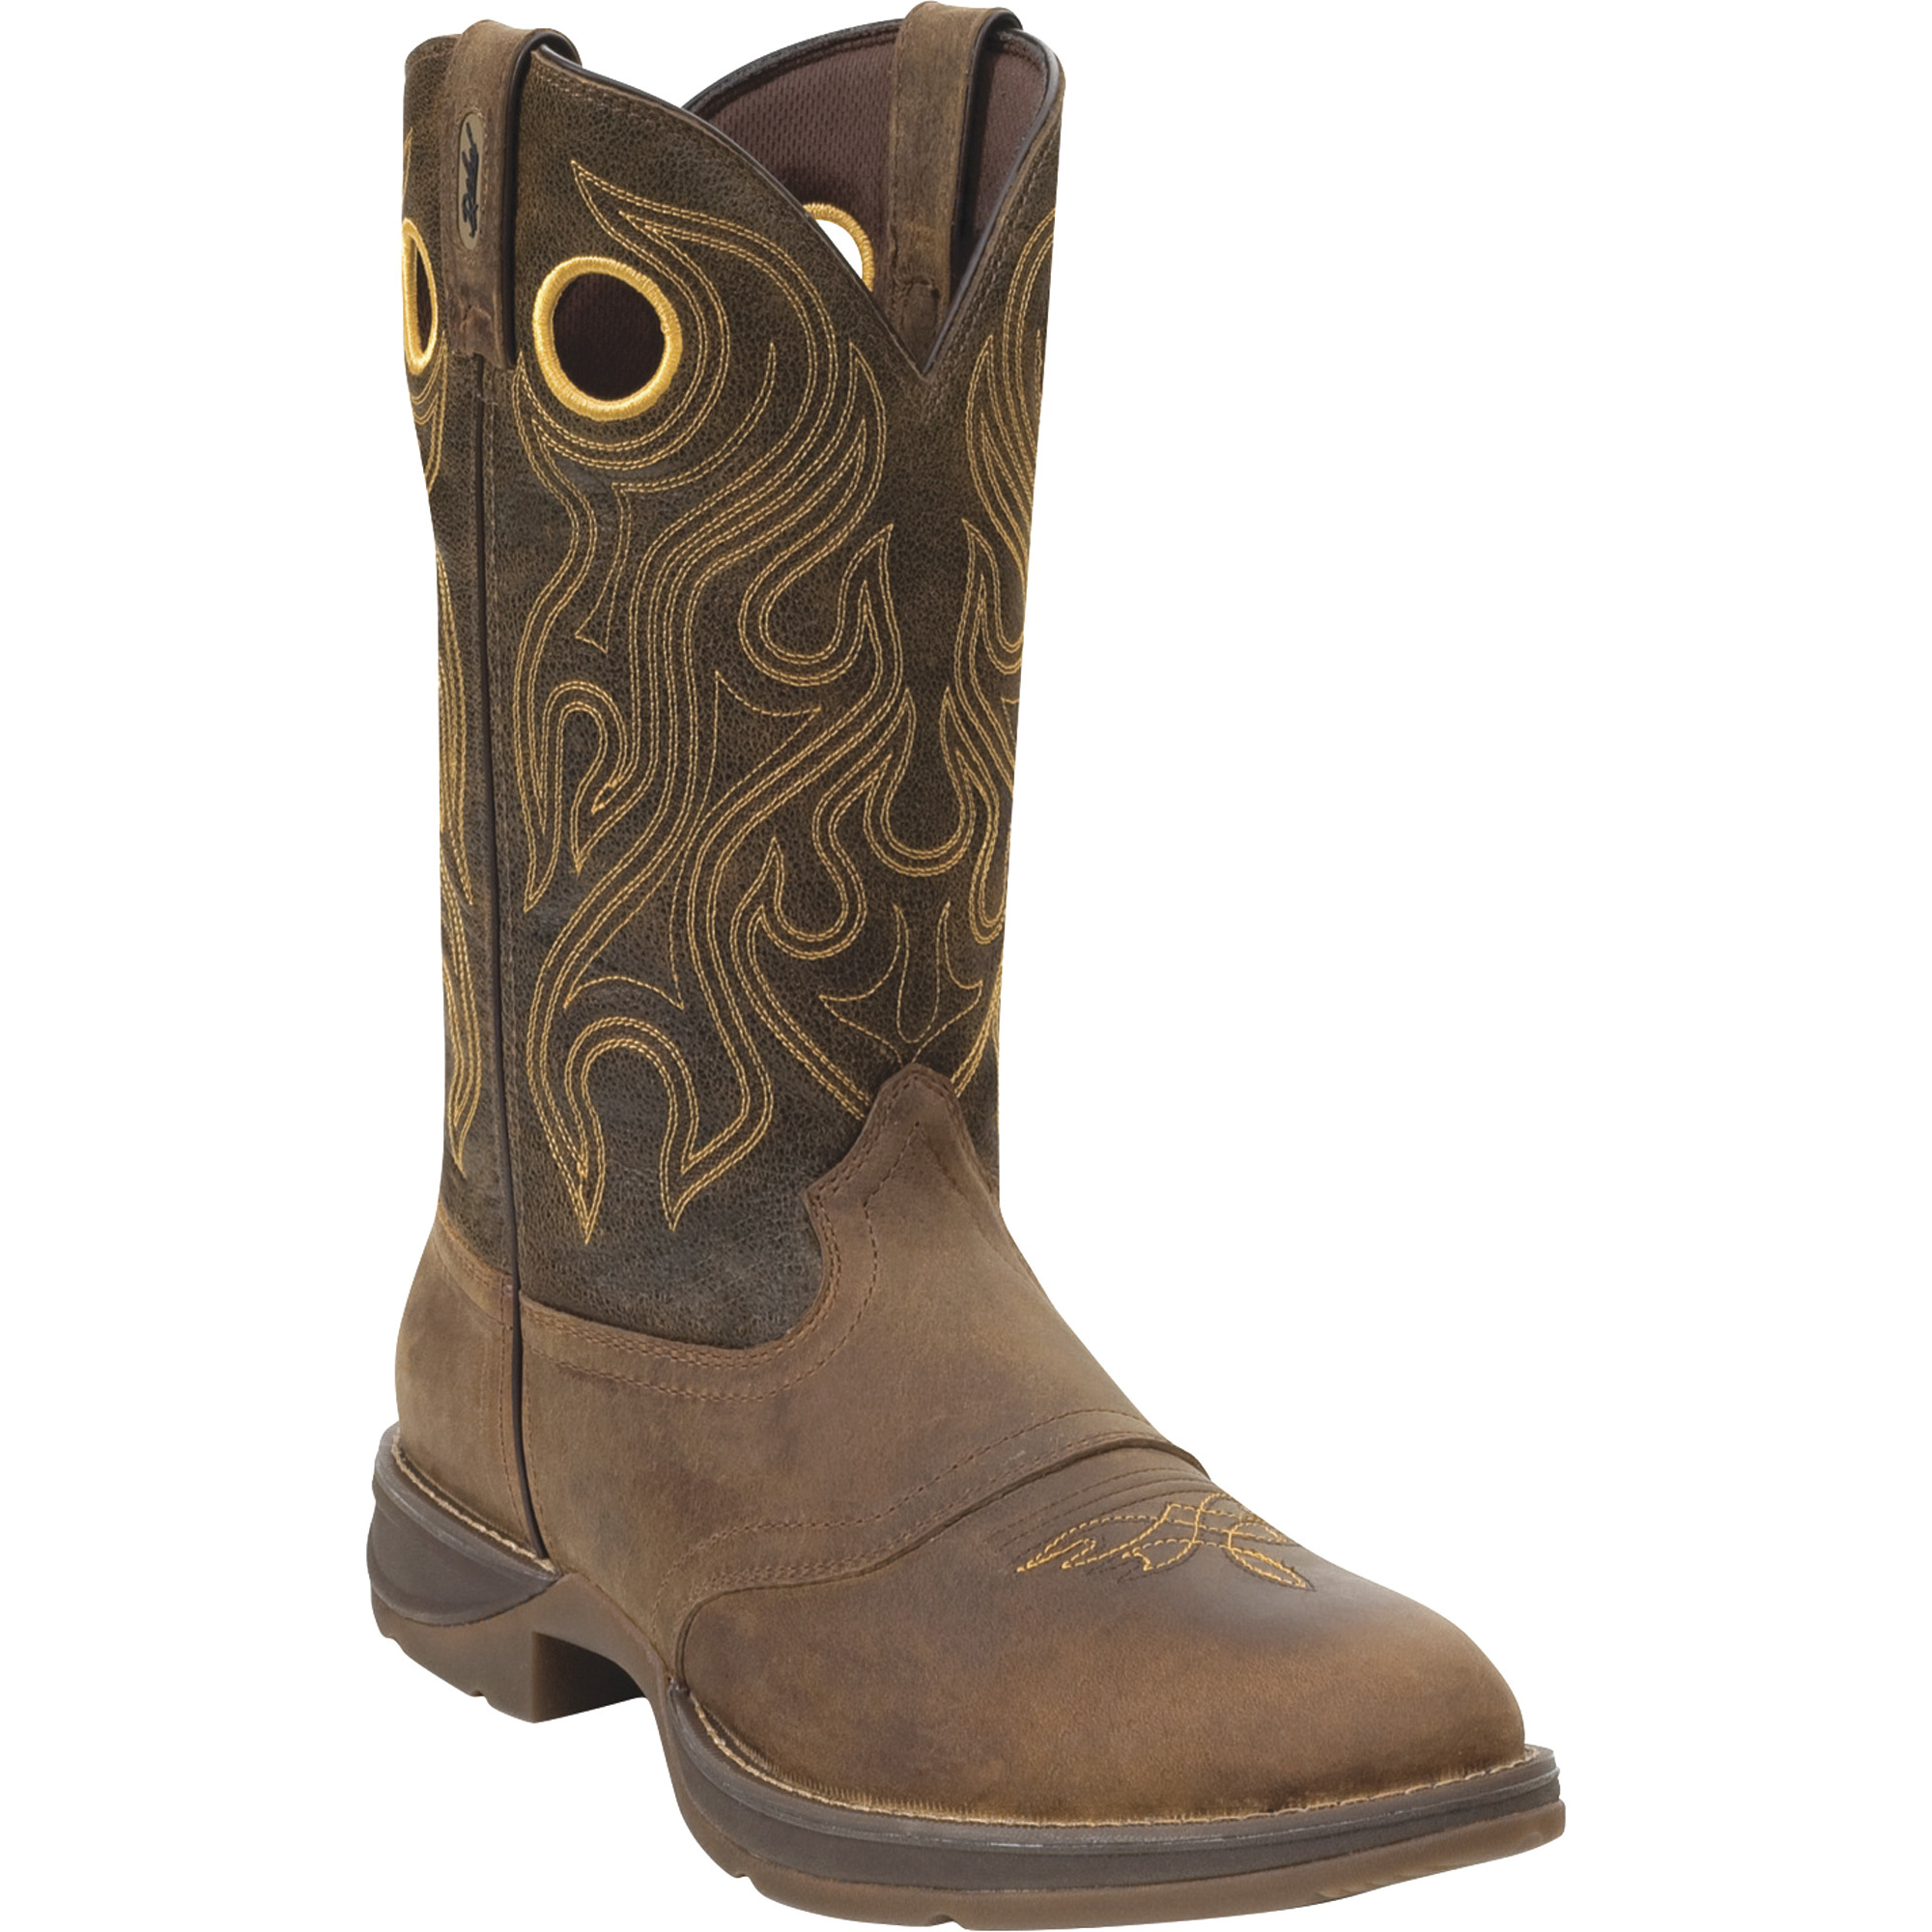 Durango Men's Rebel 12Inch Saddle Western Boot - Brown, Size 9 1/2 Wide, Model DB 5468